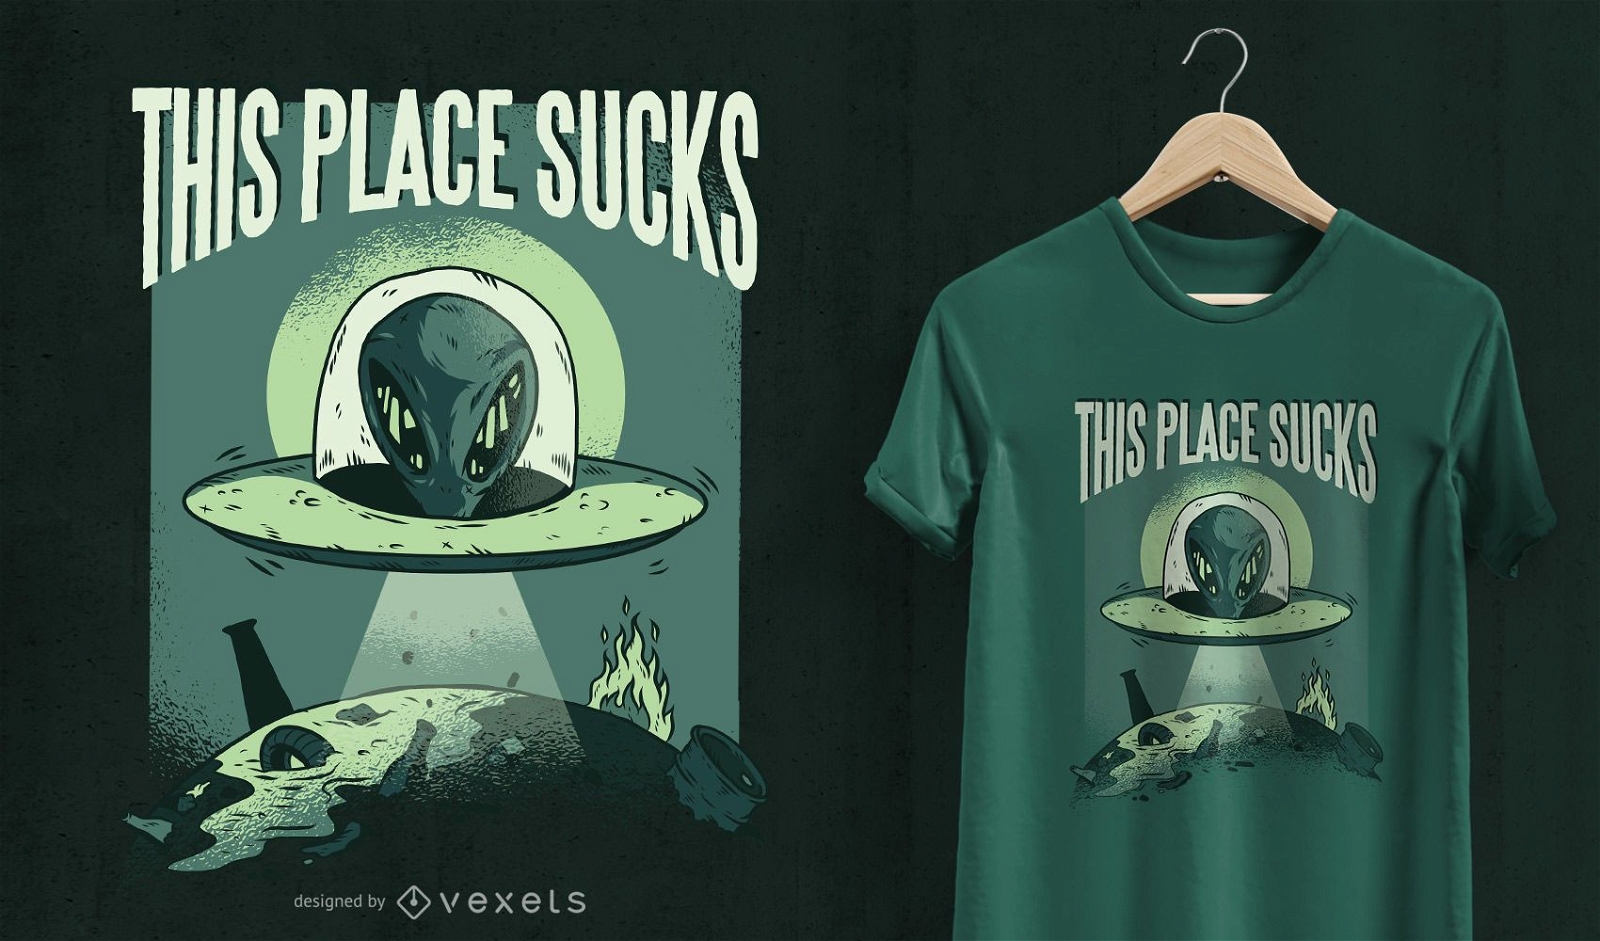 This place sucks UFO t-shirt design